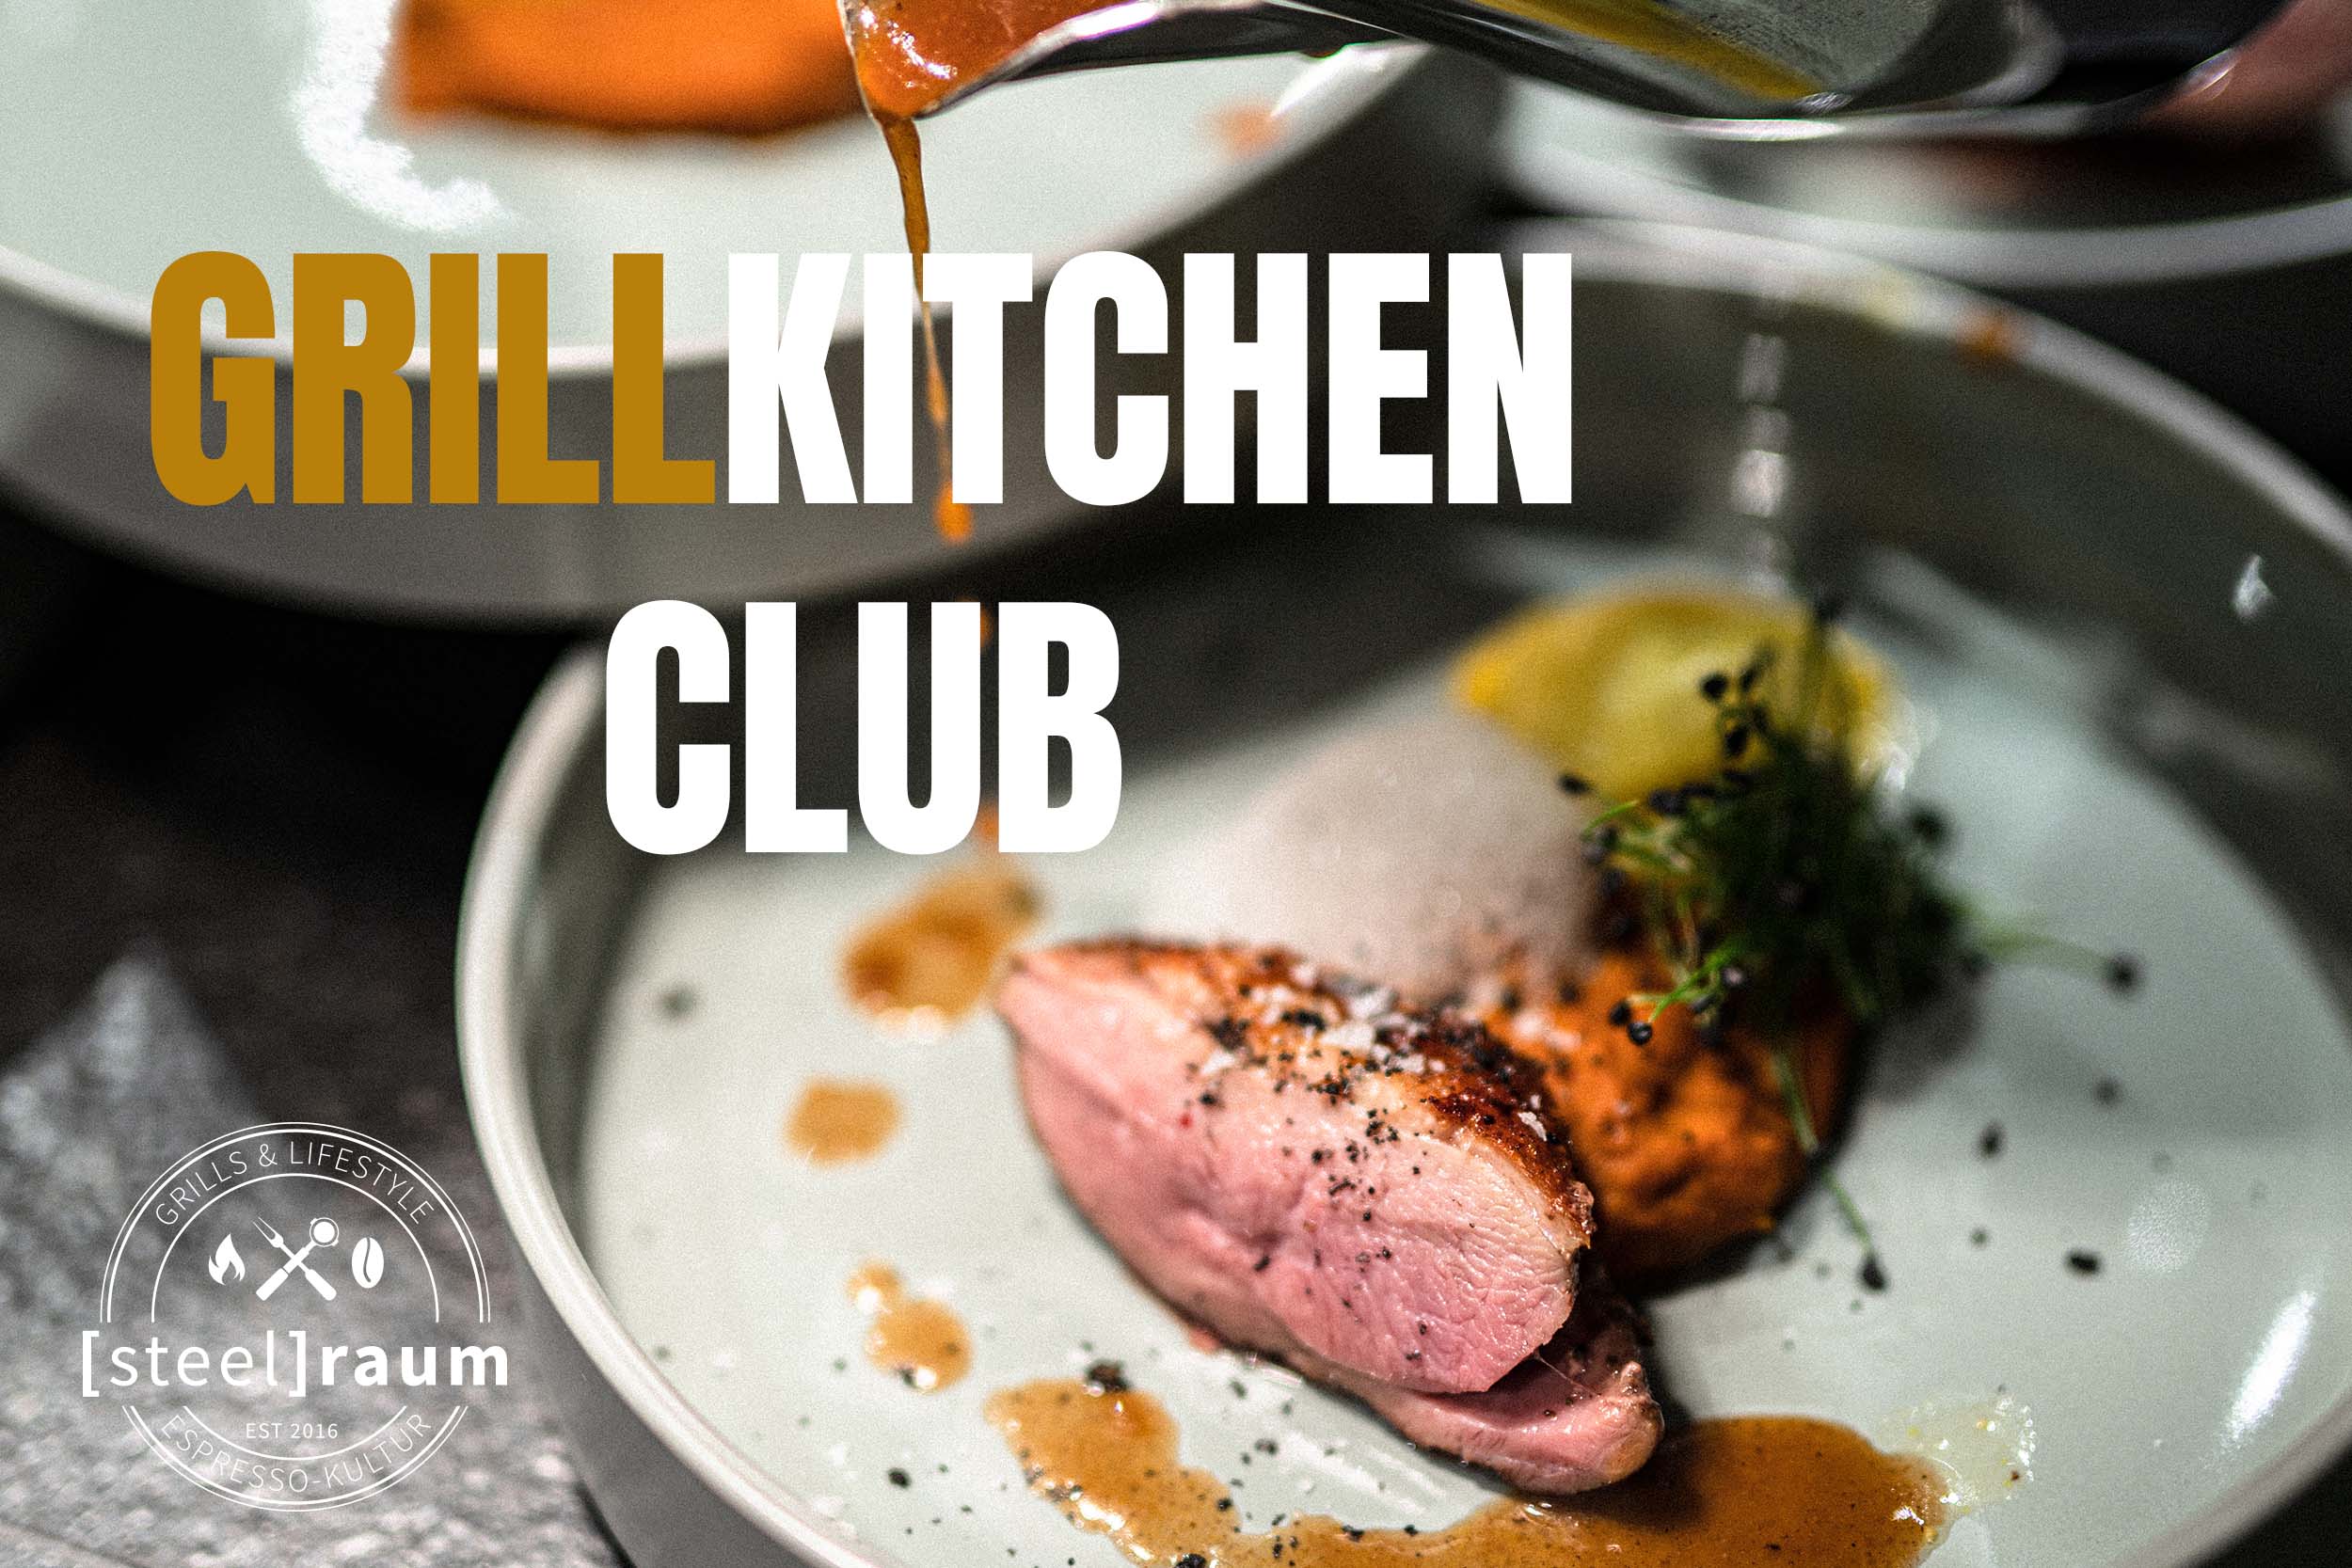 Kitchenparty "Grill-Kitchen-Club" Steelraum meets Nils Jorra